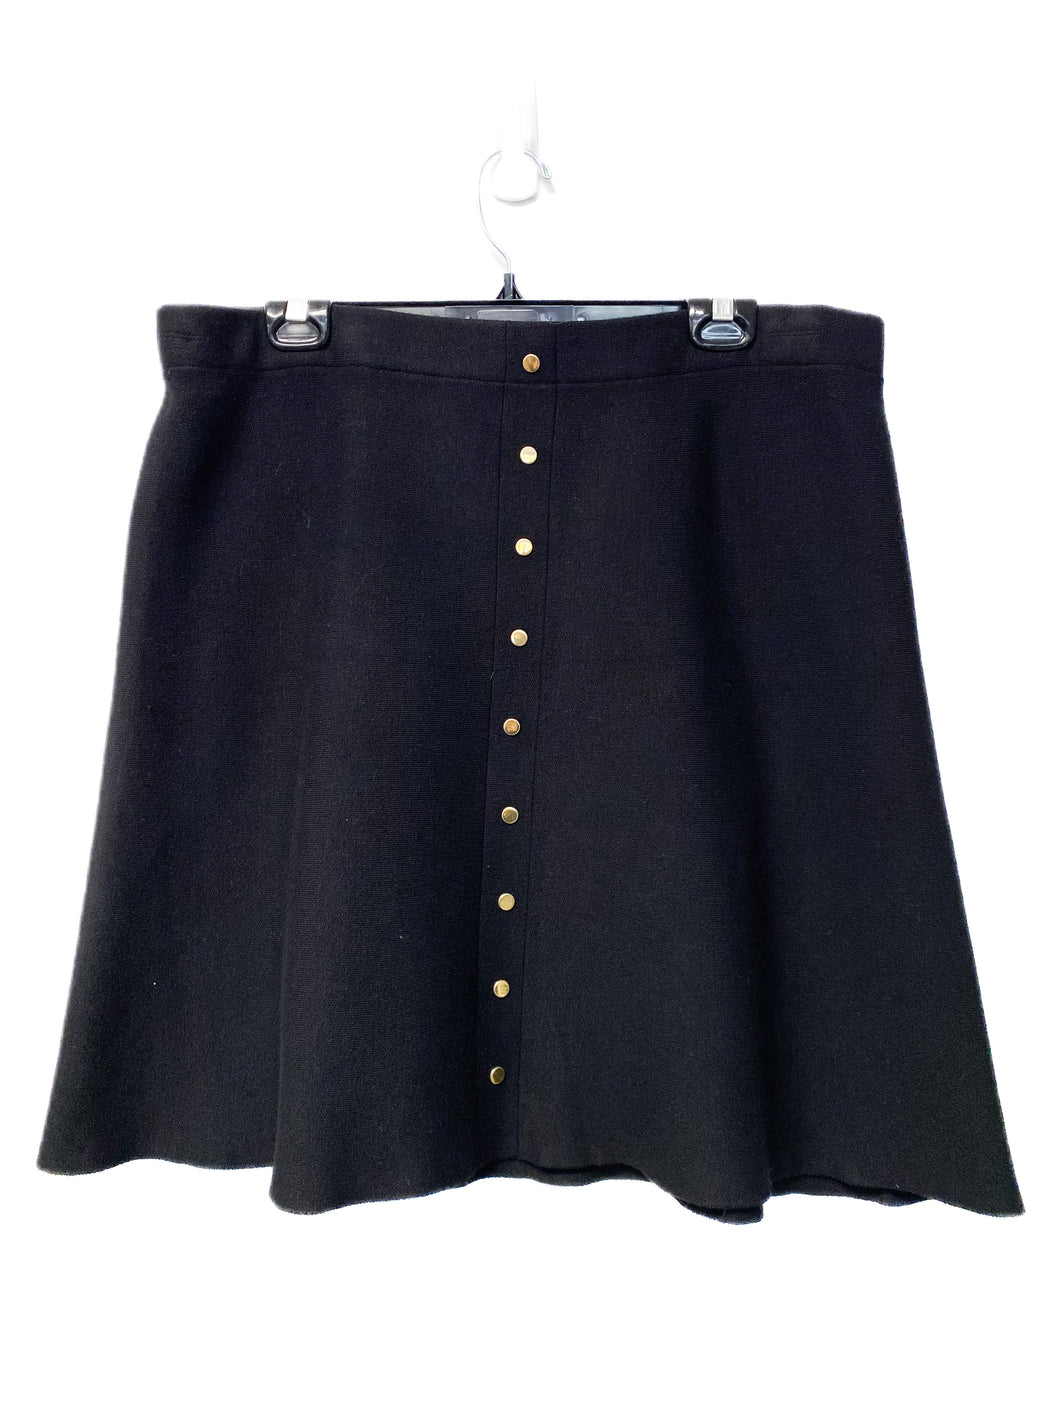 Cleo Skirt (XL)